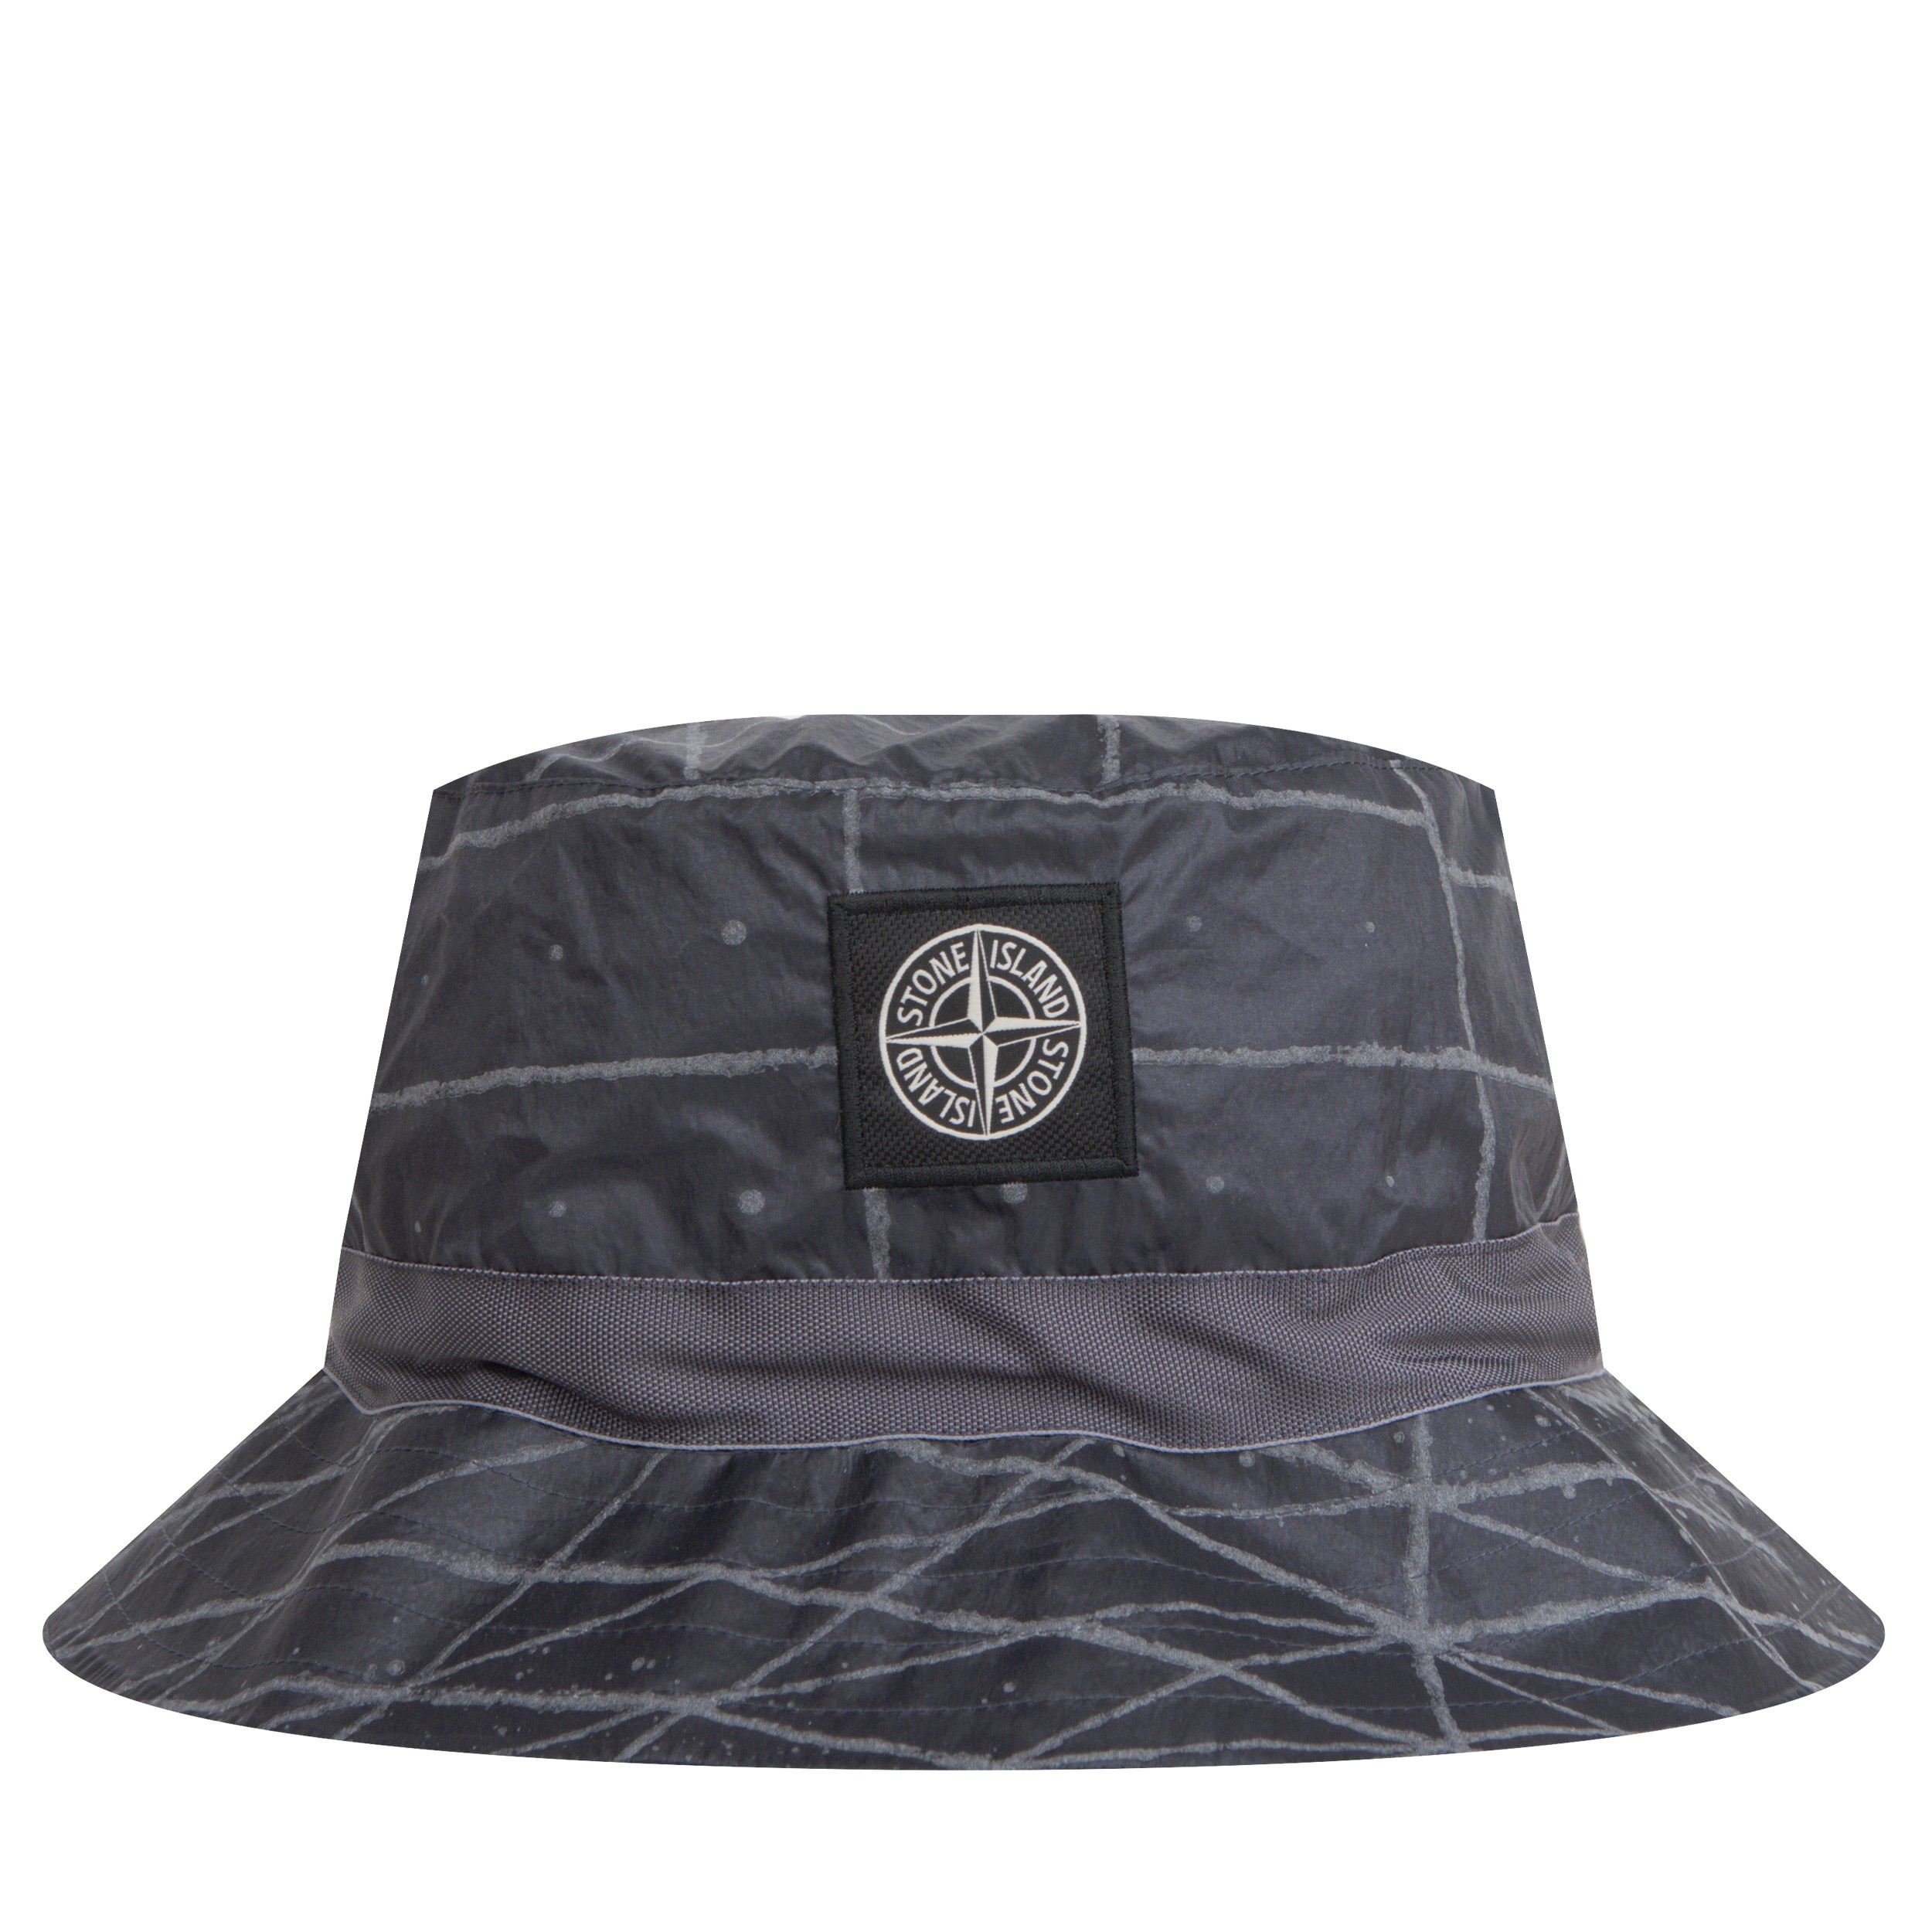 Stone Island 'Reflective' Nylon Packable Bucket Hat Pewter Grey